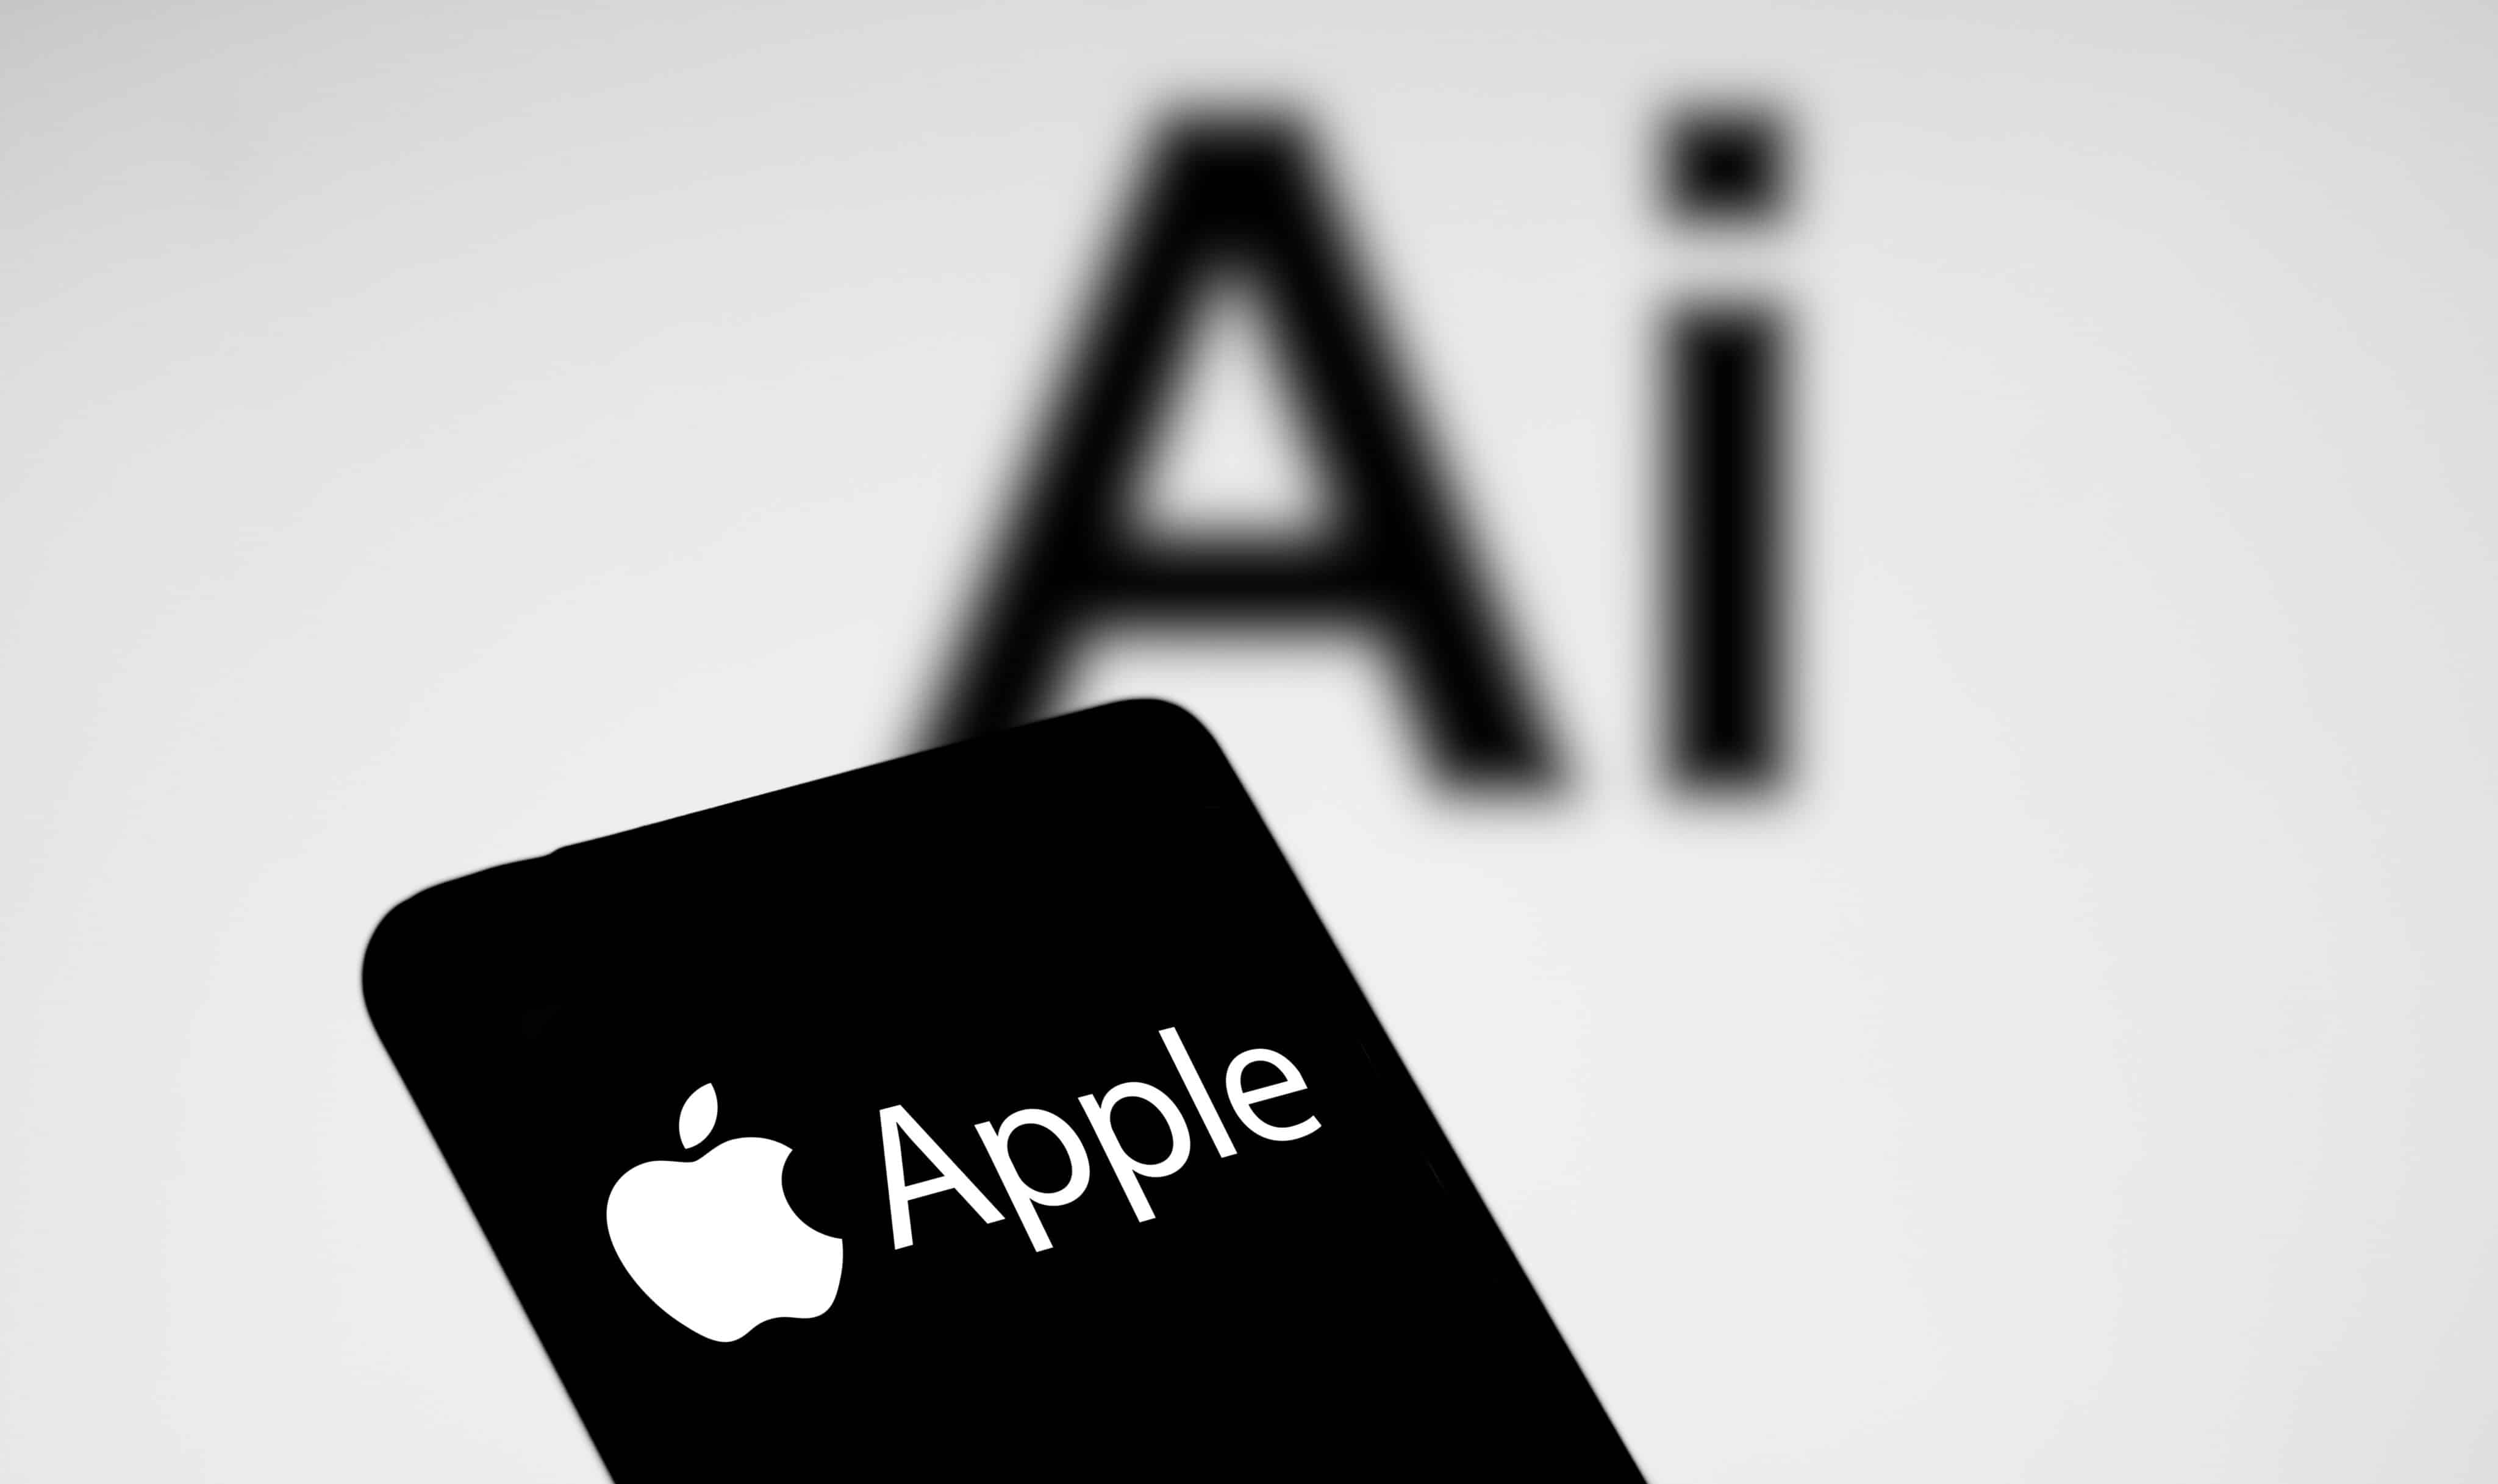 Apple e inteligência artificial (IA)